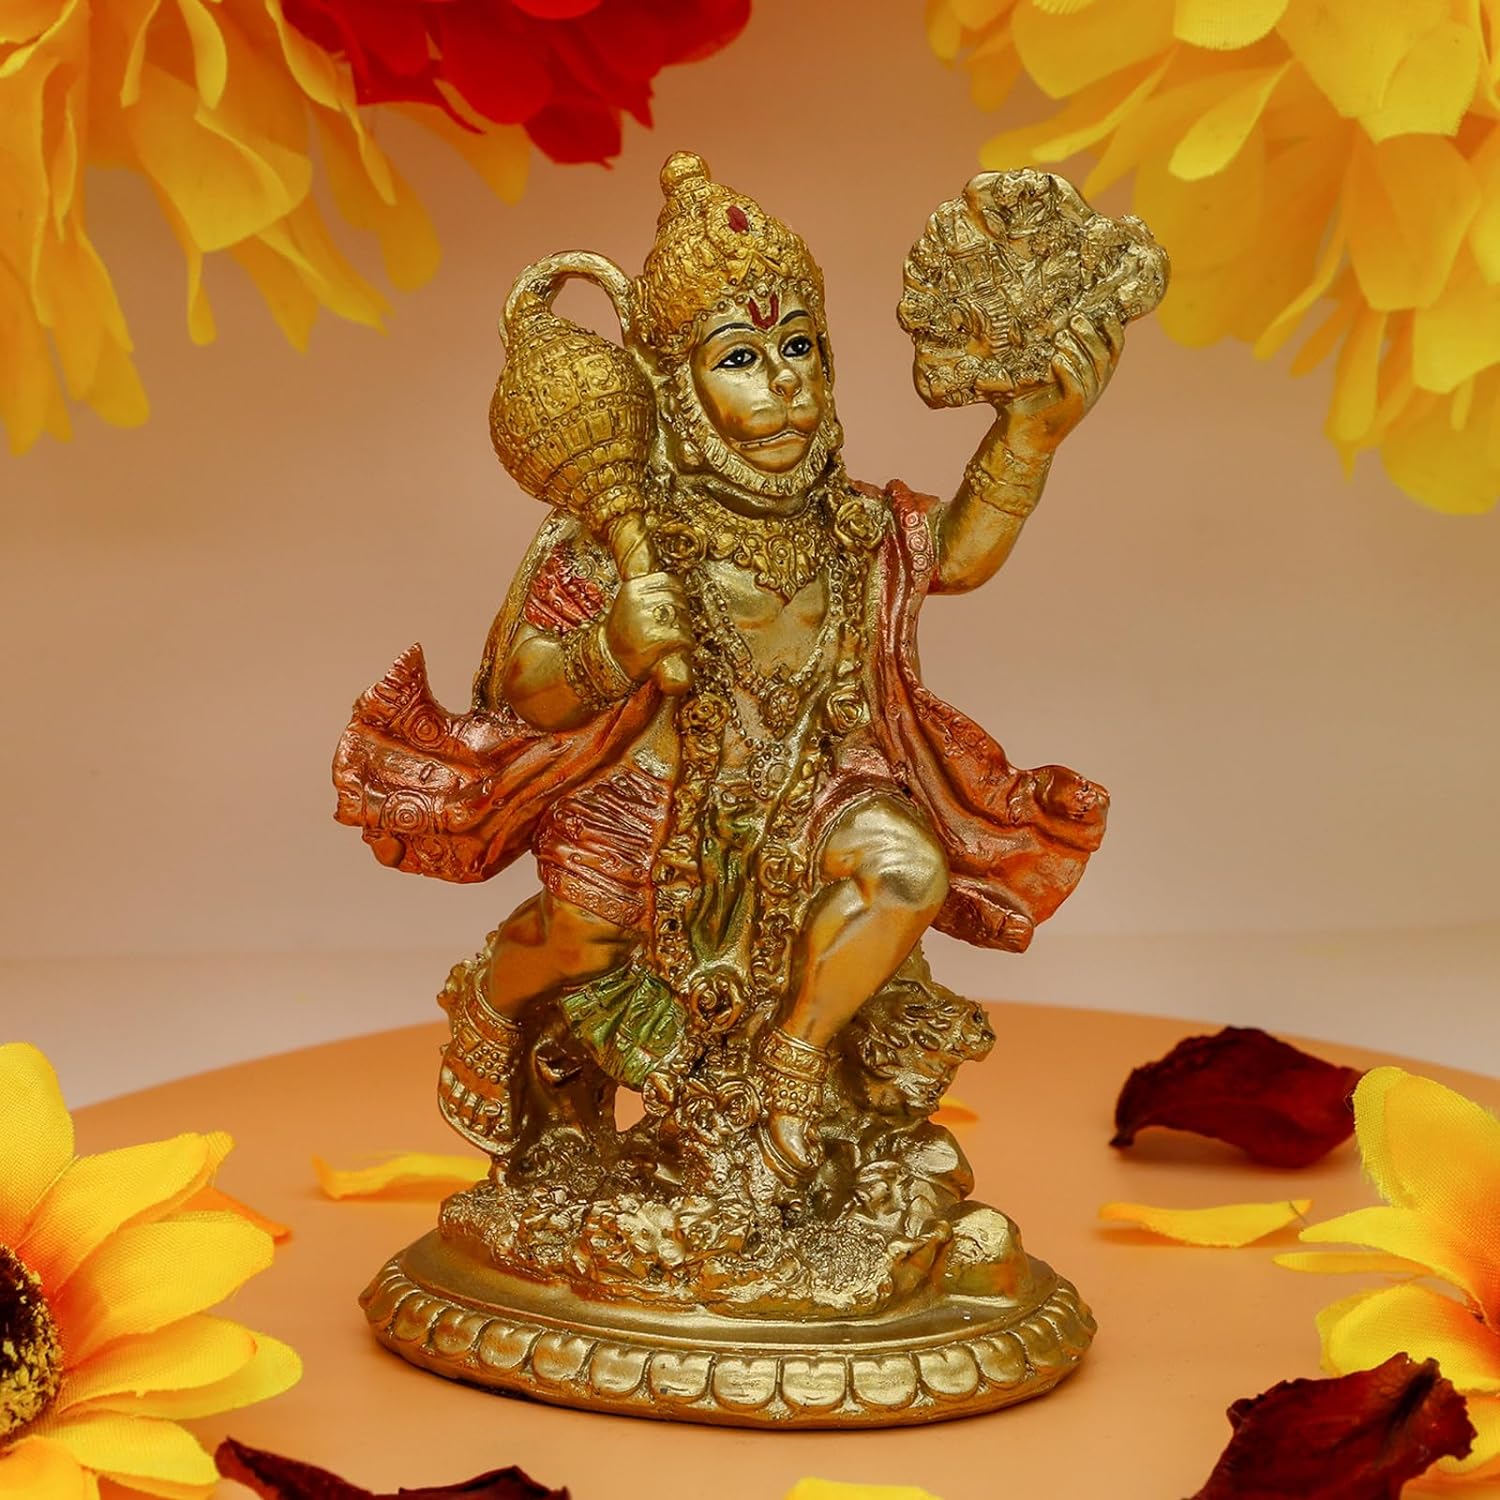 alikiki Hindu God Flying Hanuman Statue - Indian Idol Hanuman Murti Pooja Sculpture India Lord Figurine Home Office Temple Mandir Diwali Puja Gifts Item Yoga Altar Shrine Decor